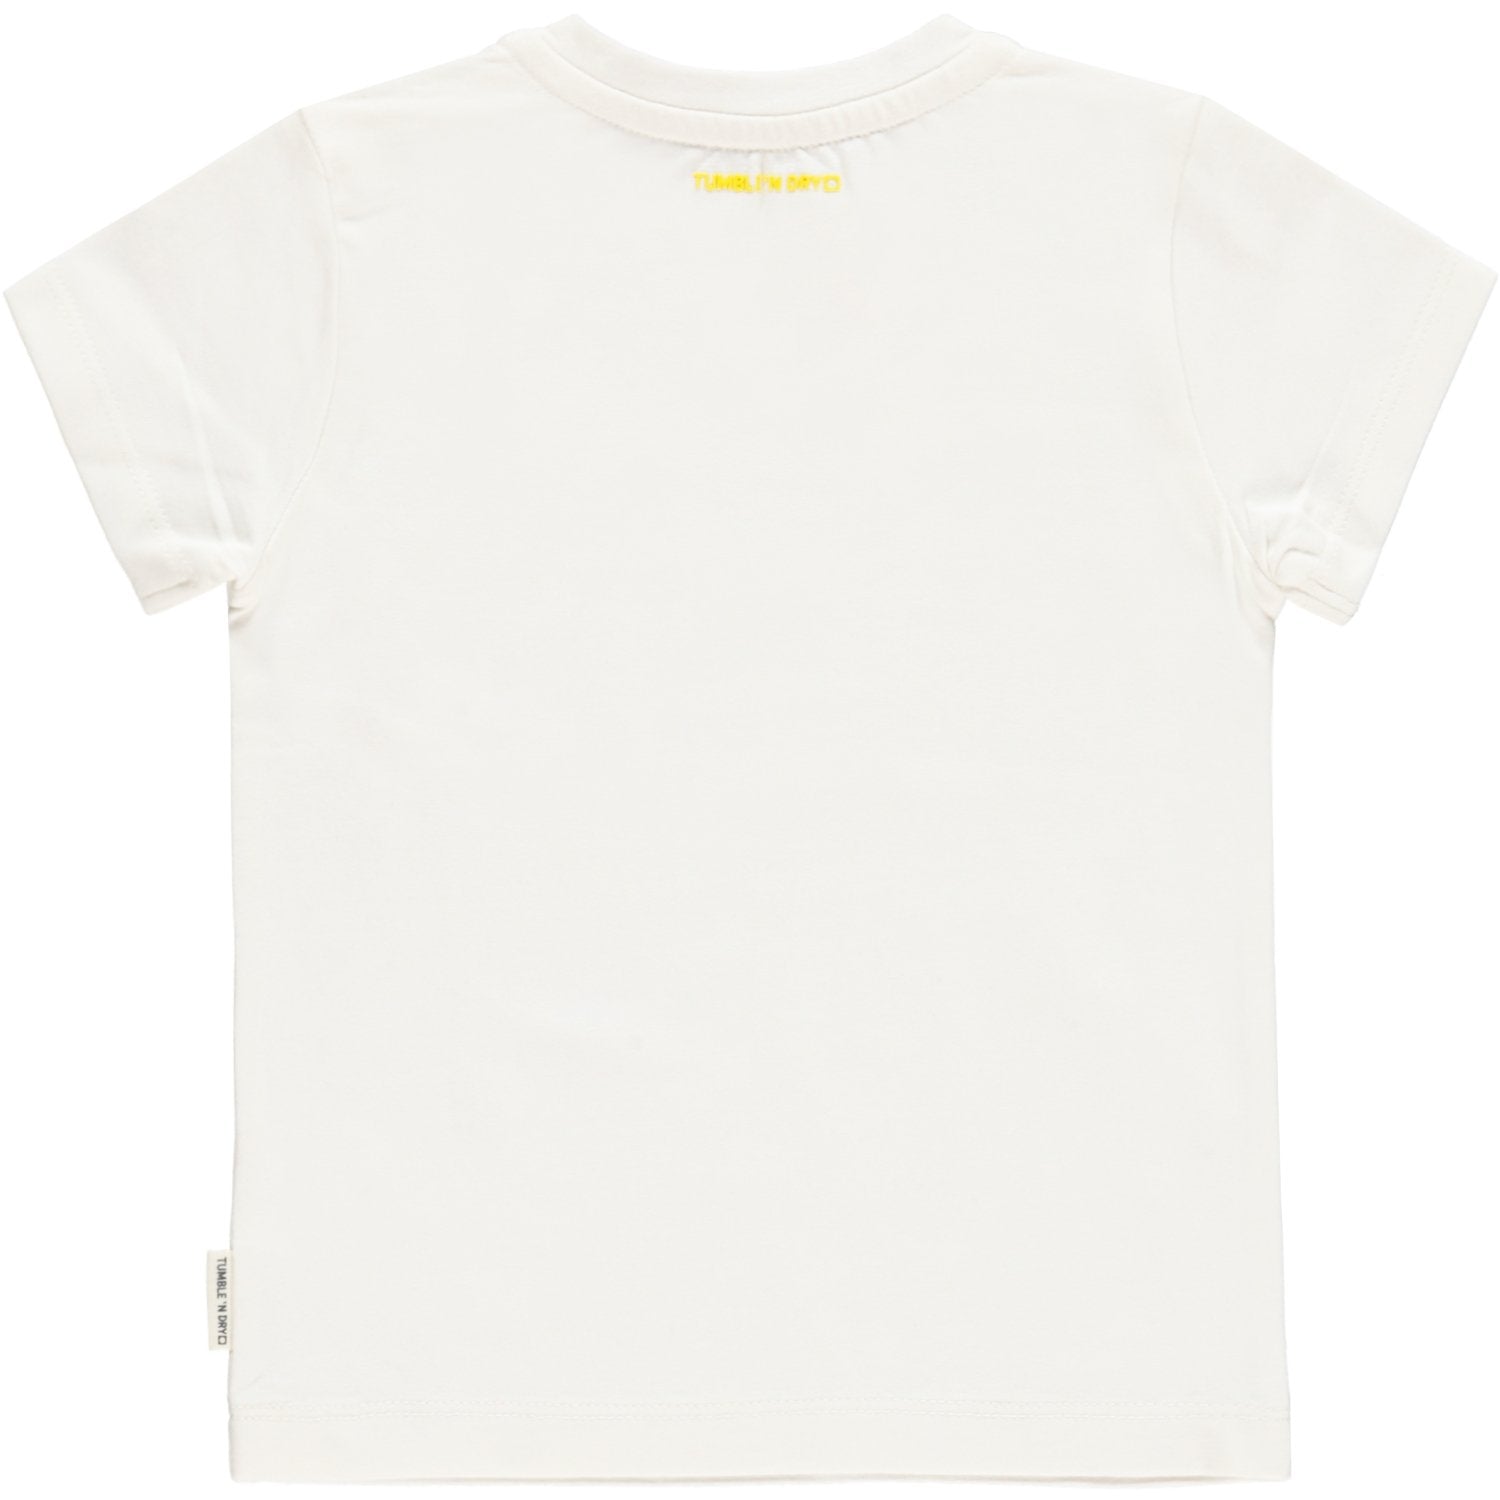 Baby Meisjes T-shirt Km O-hals van Tumble 'n Dry in de kleur Snow white in maat 86.